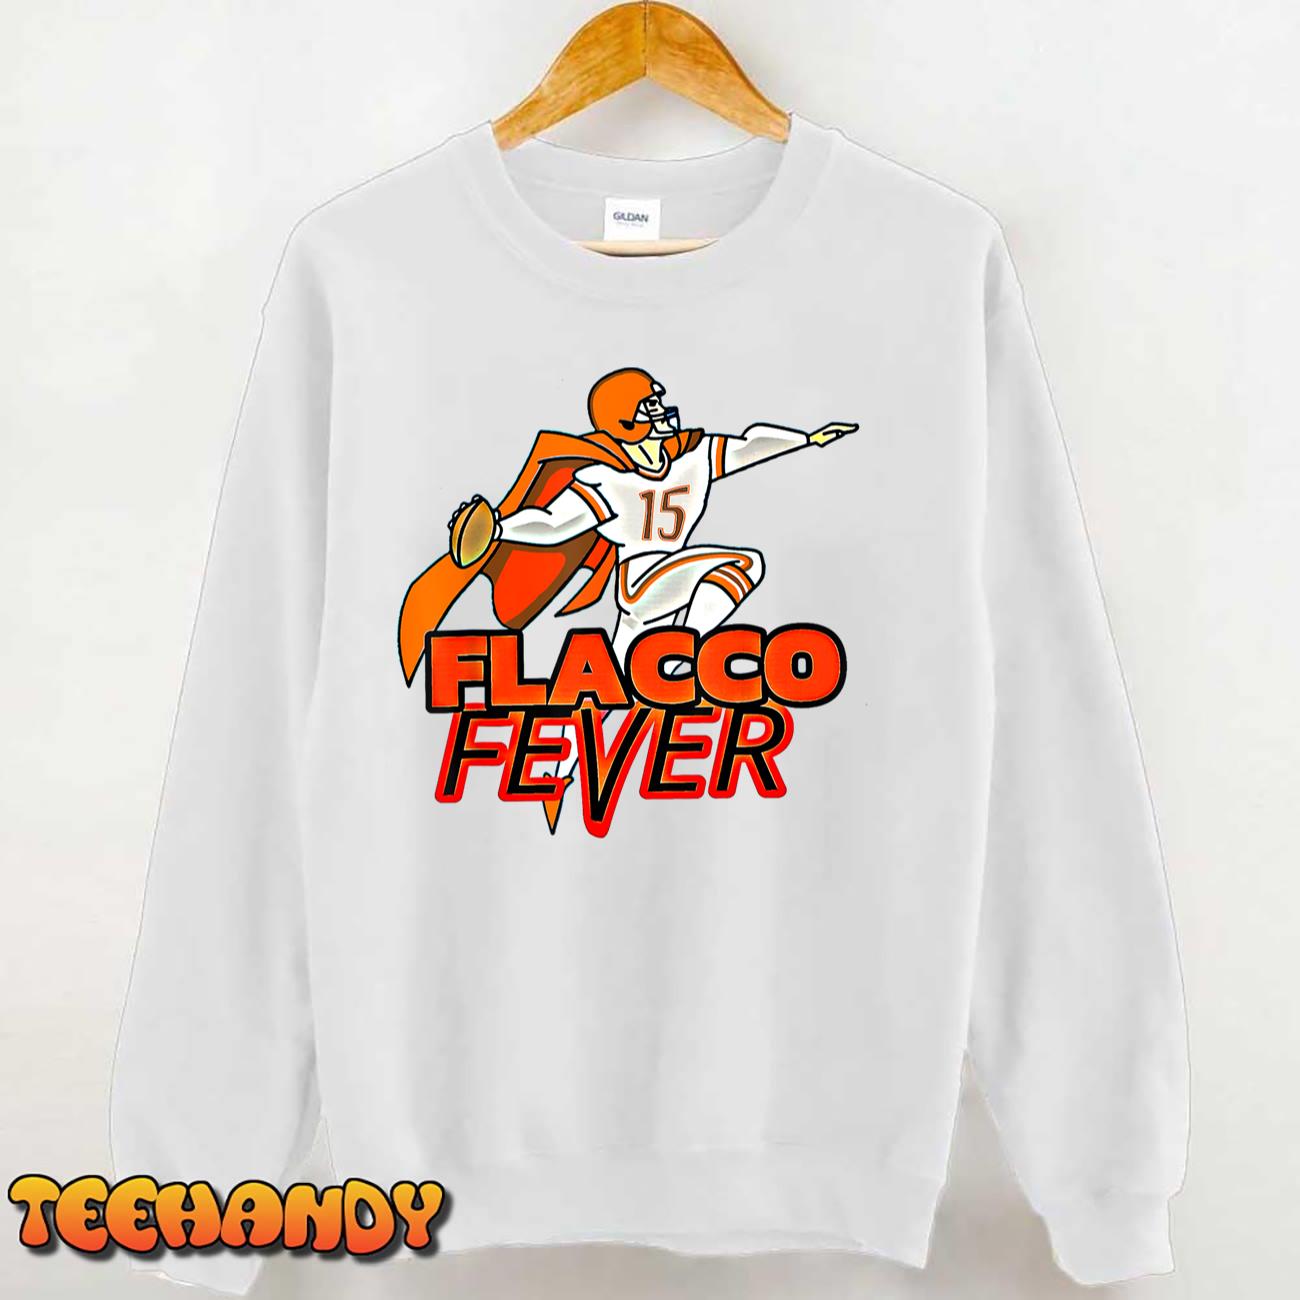 Flacco Fever Is Sweet T-Shirt